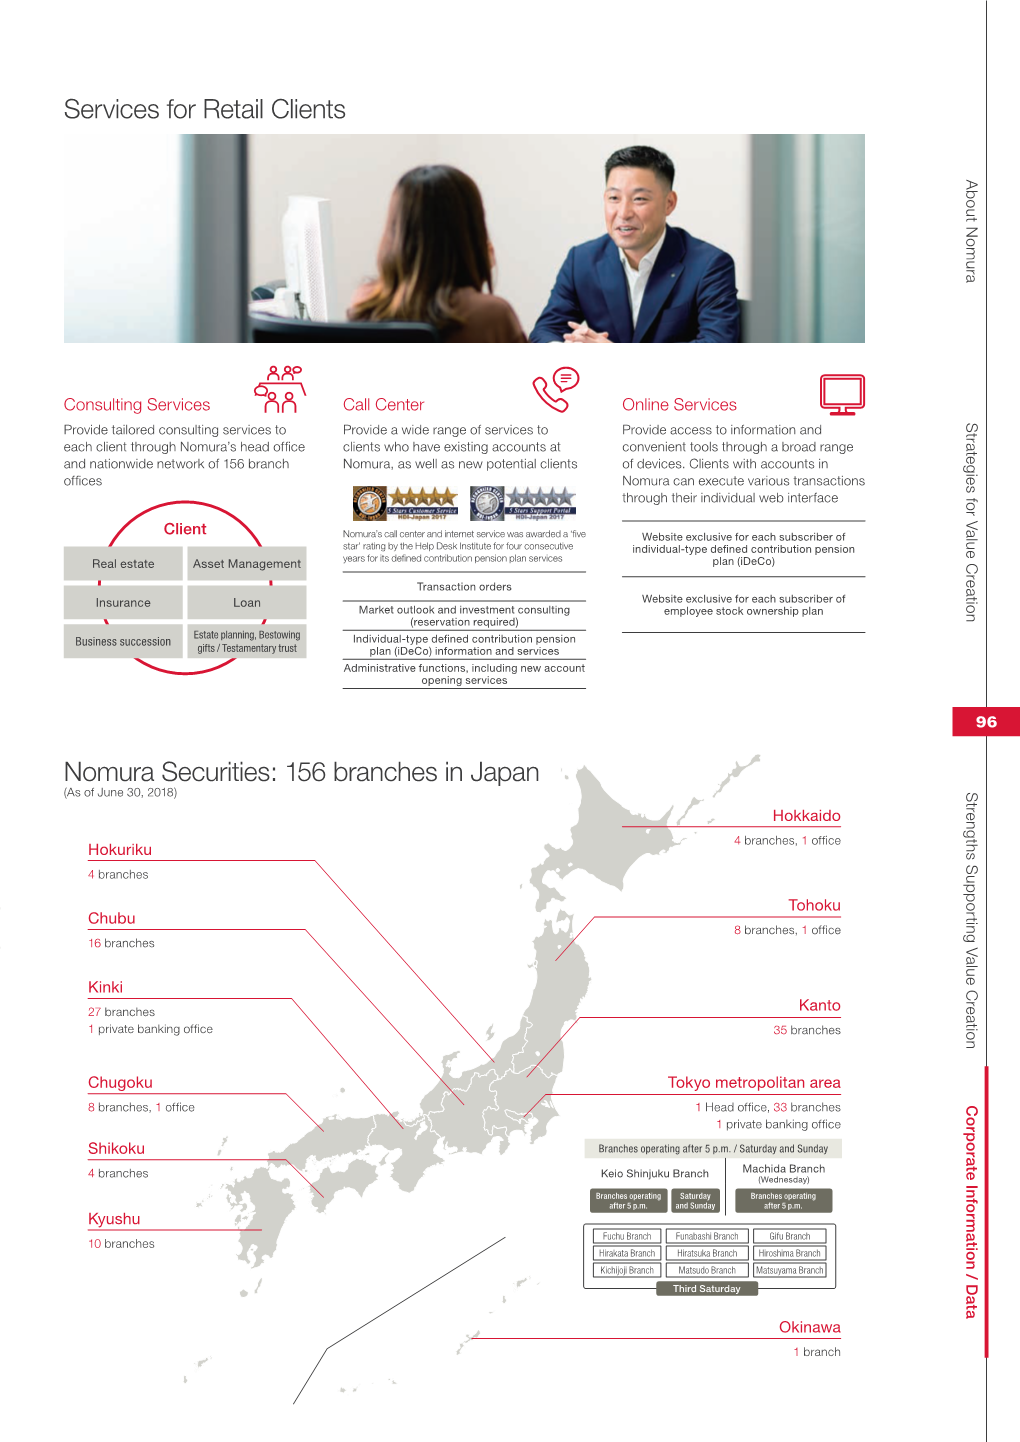 Nomura Holdings, Inc. Nomura Report 2018 Services for Retail Client (PDF)